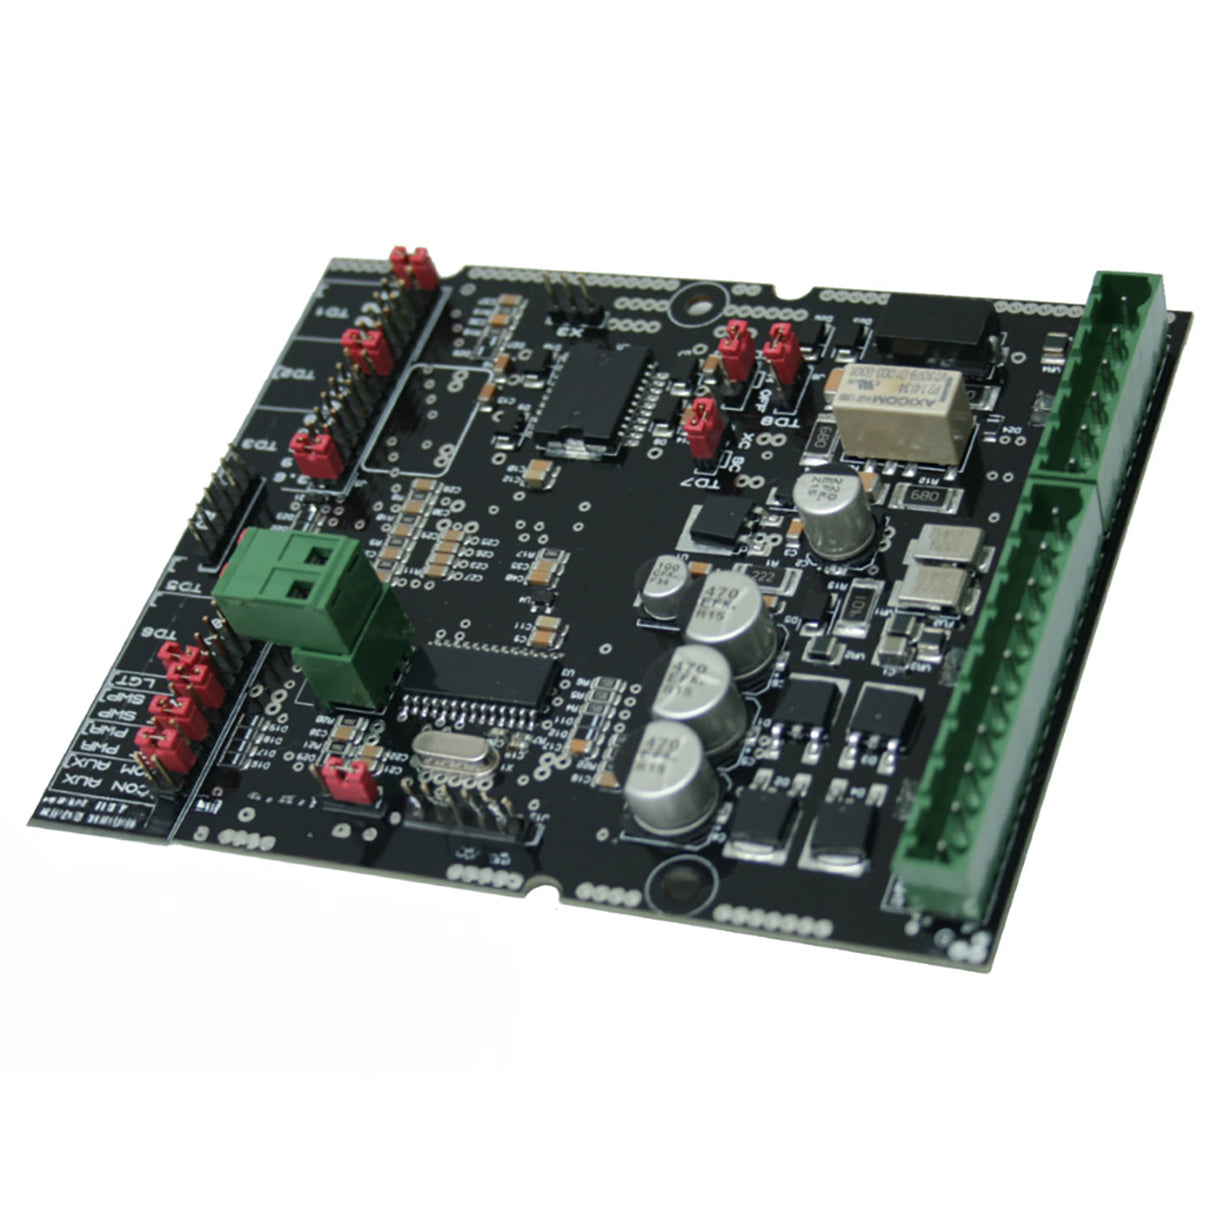 Printed circuit board ACR 5000 new model